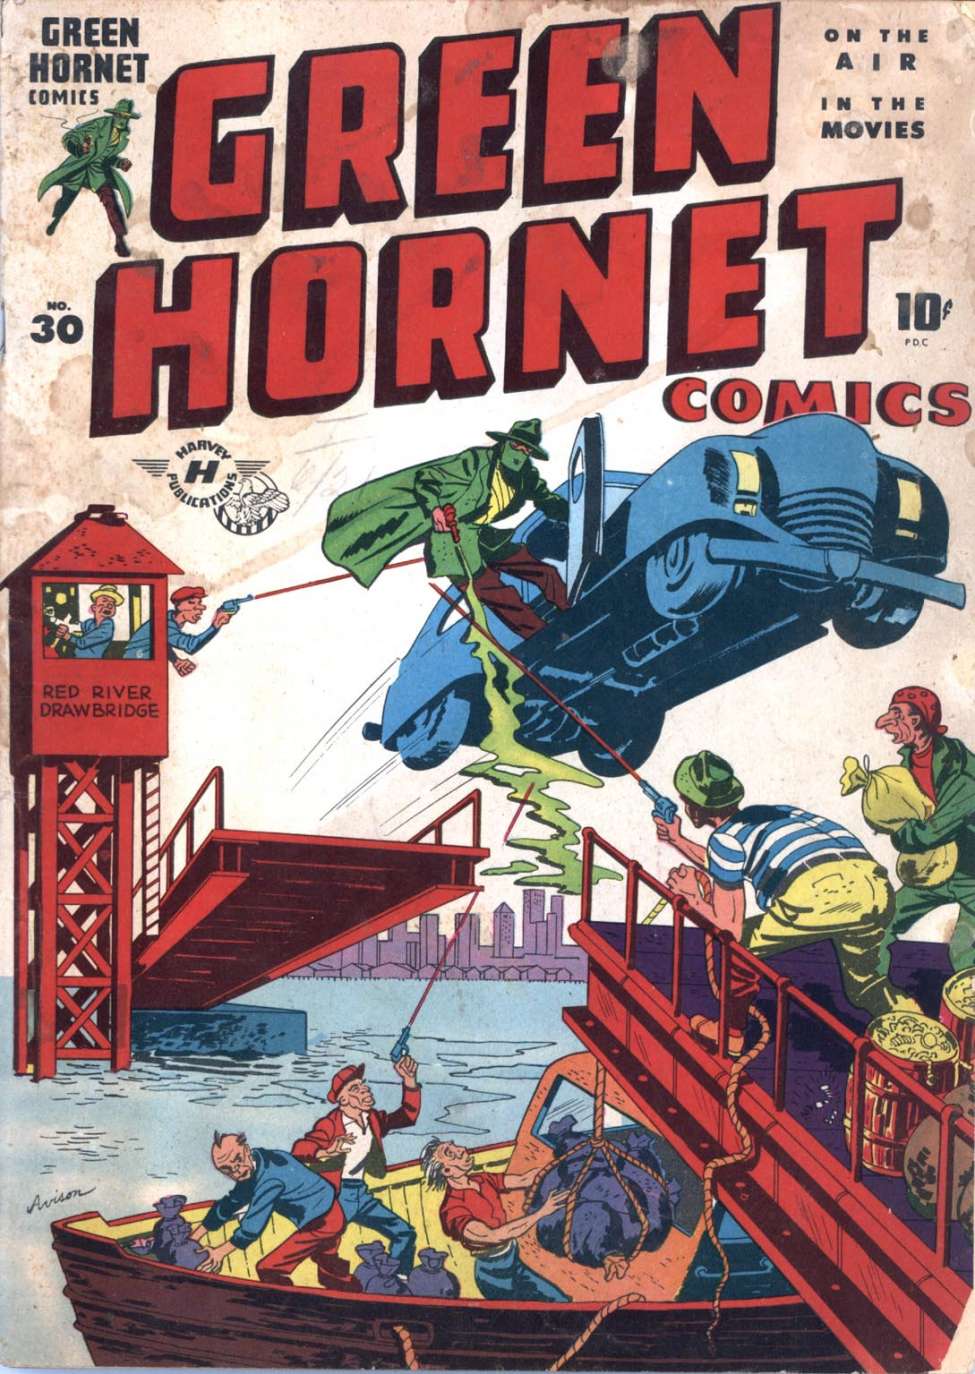 Book Cover For Green Hornet Comics 30